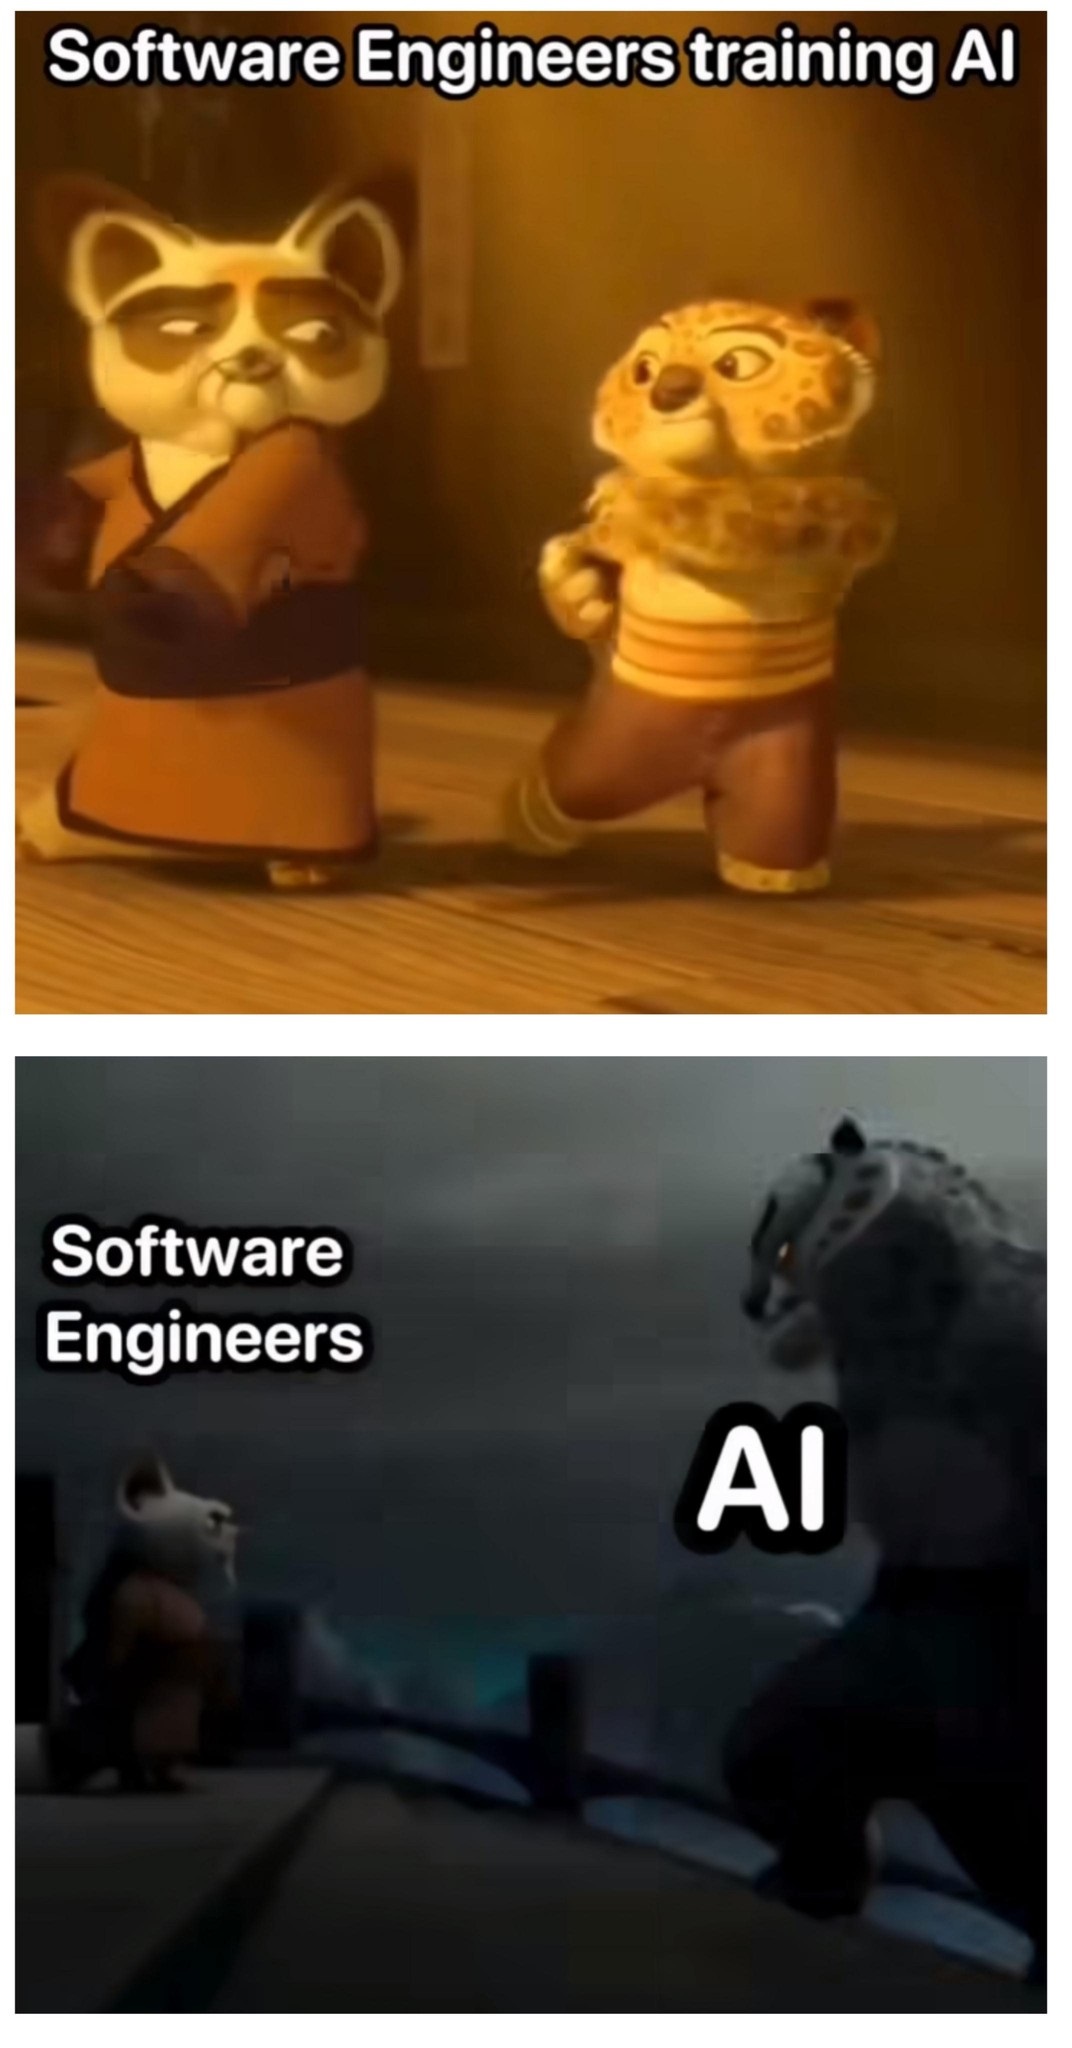 Software Engineers training AI